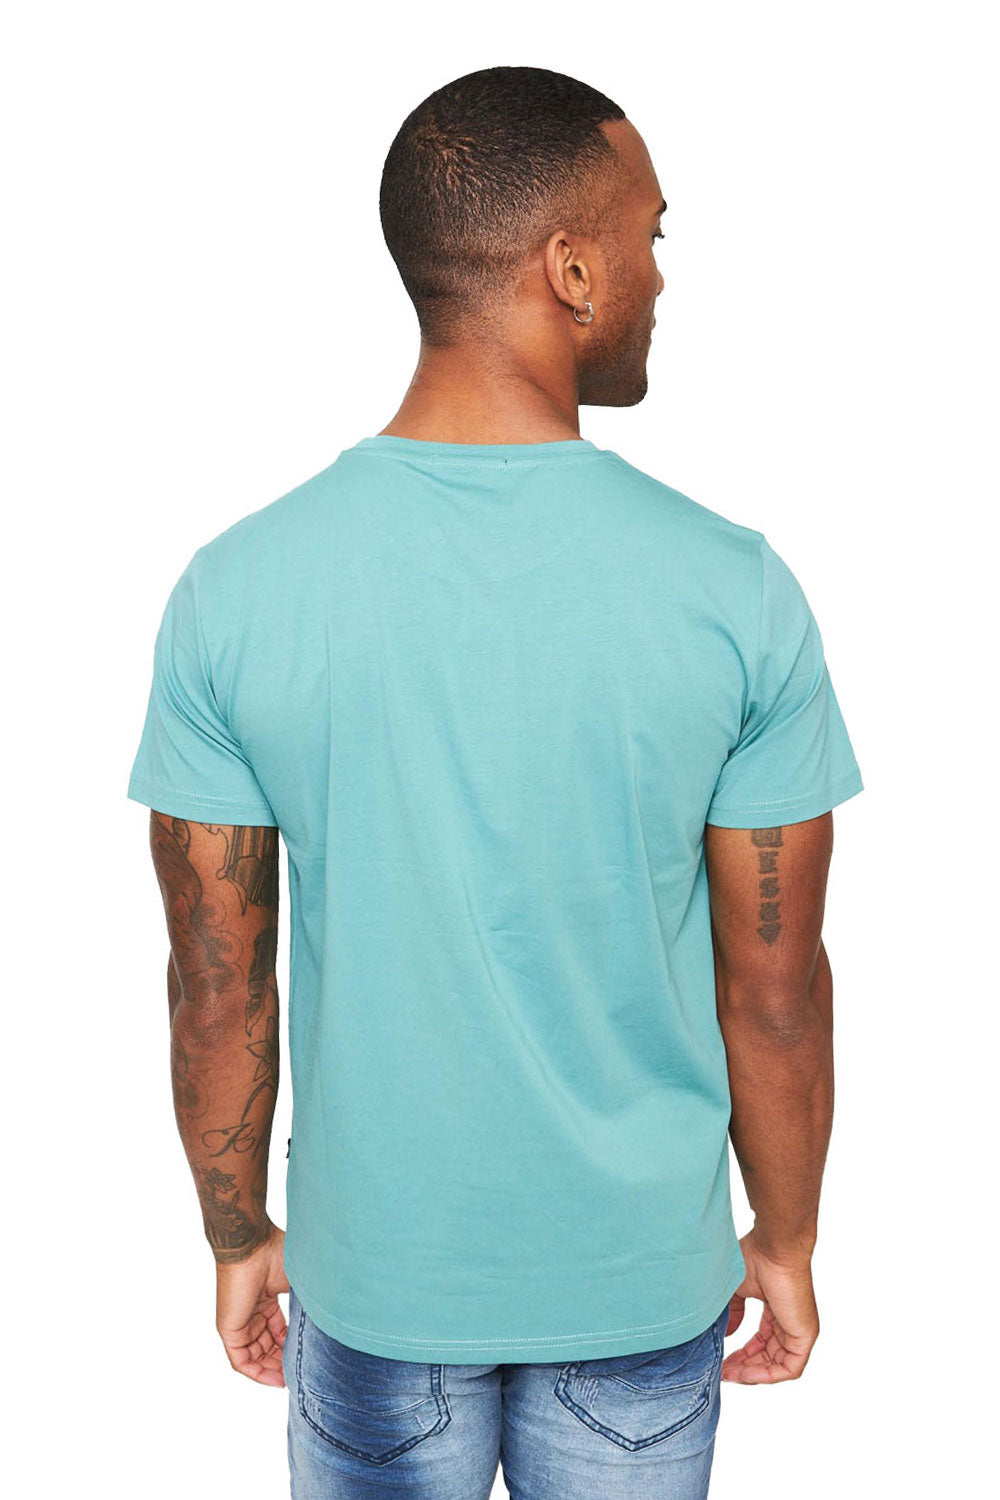 BARABAS Men's Basic Solid Color Crew-neck T-shirts ST933 cyan